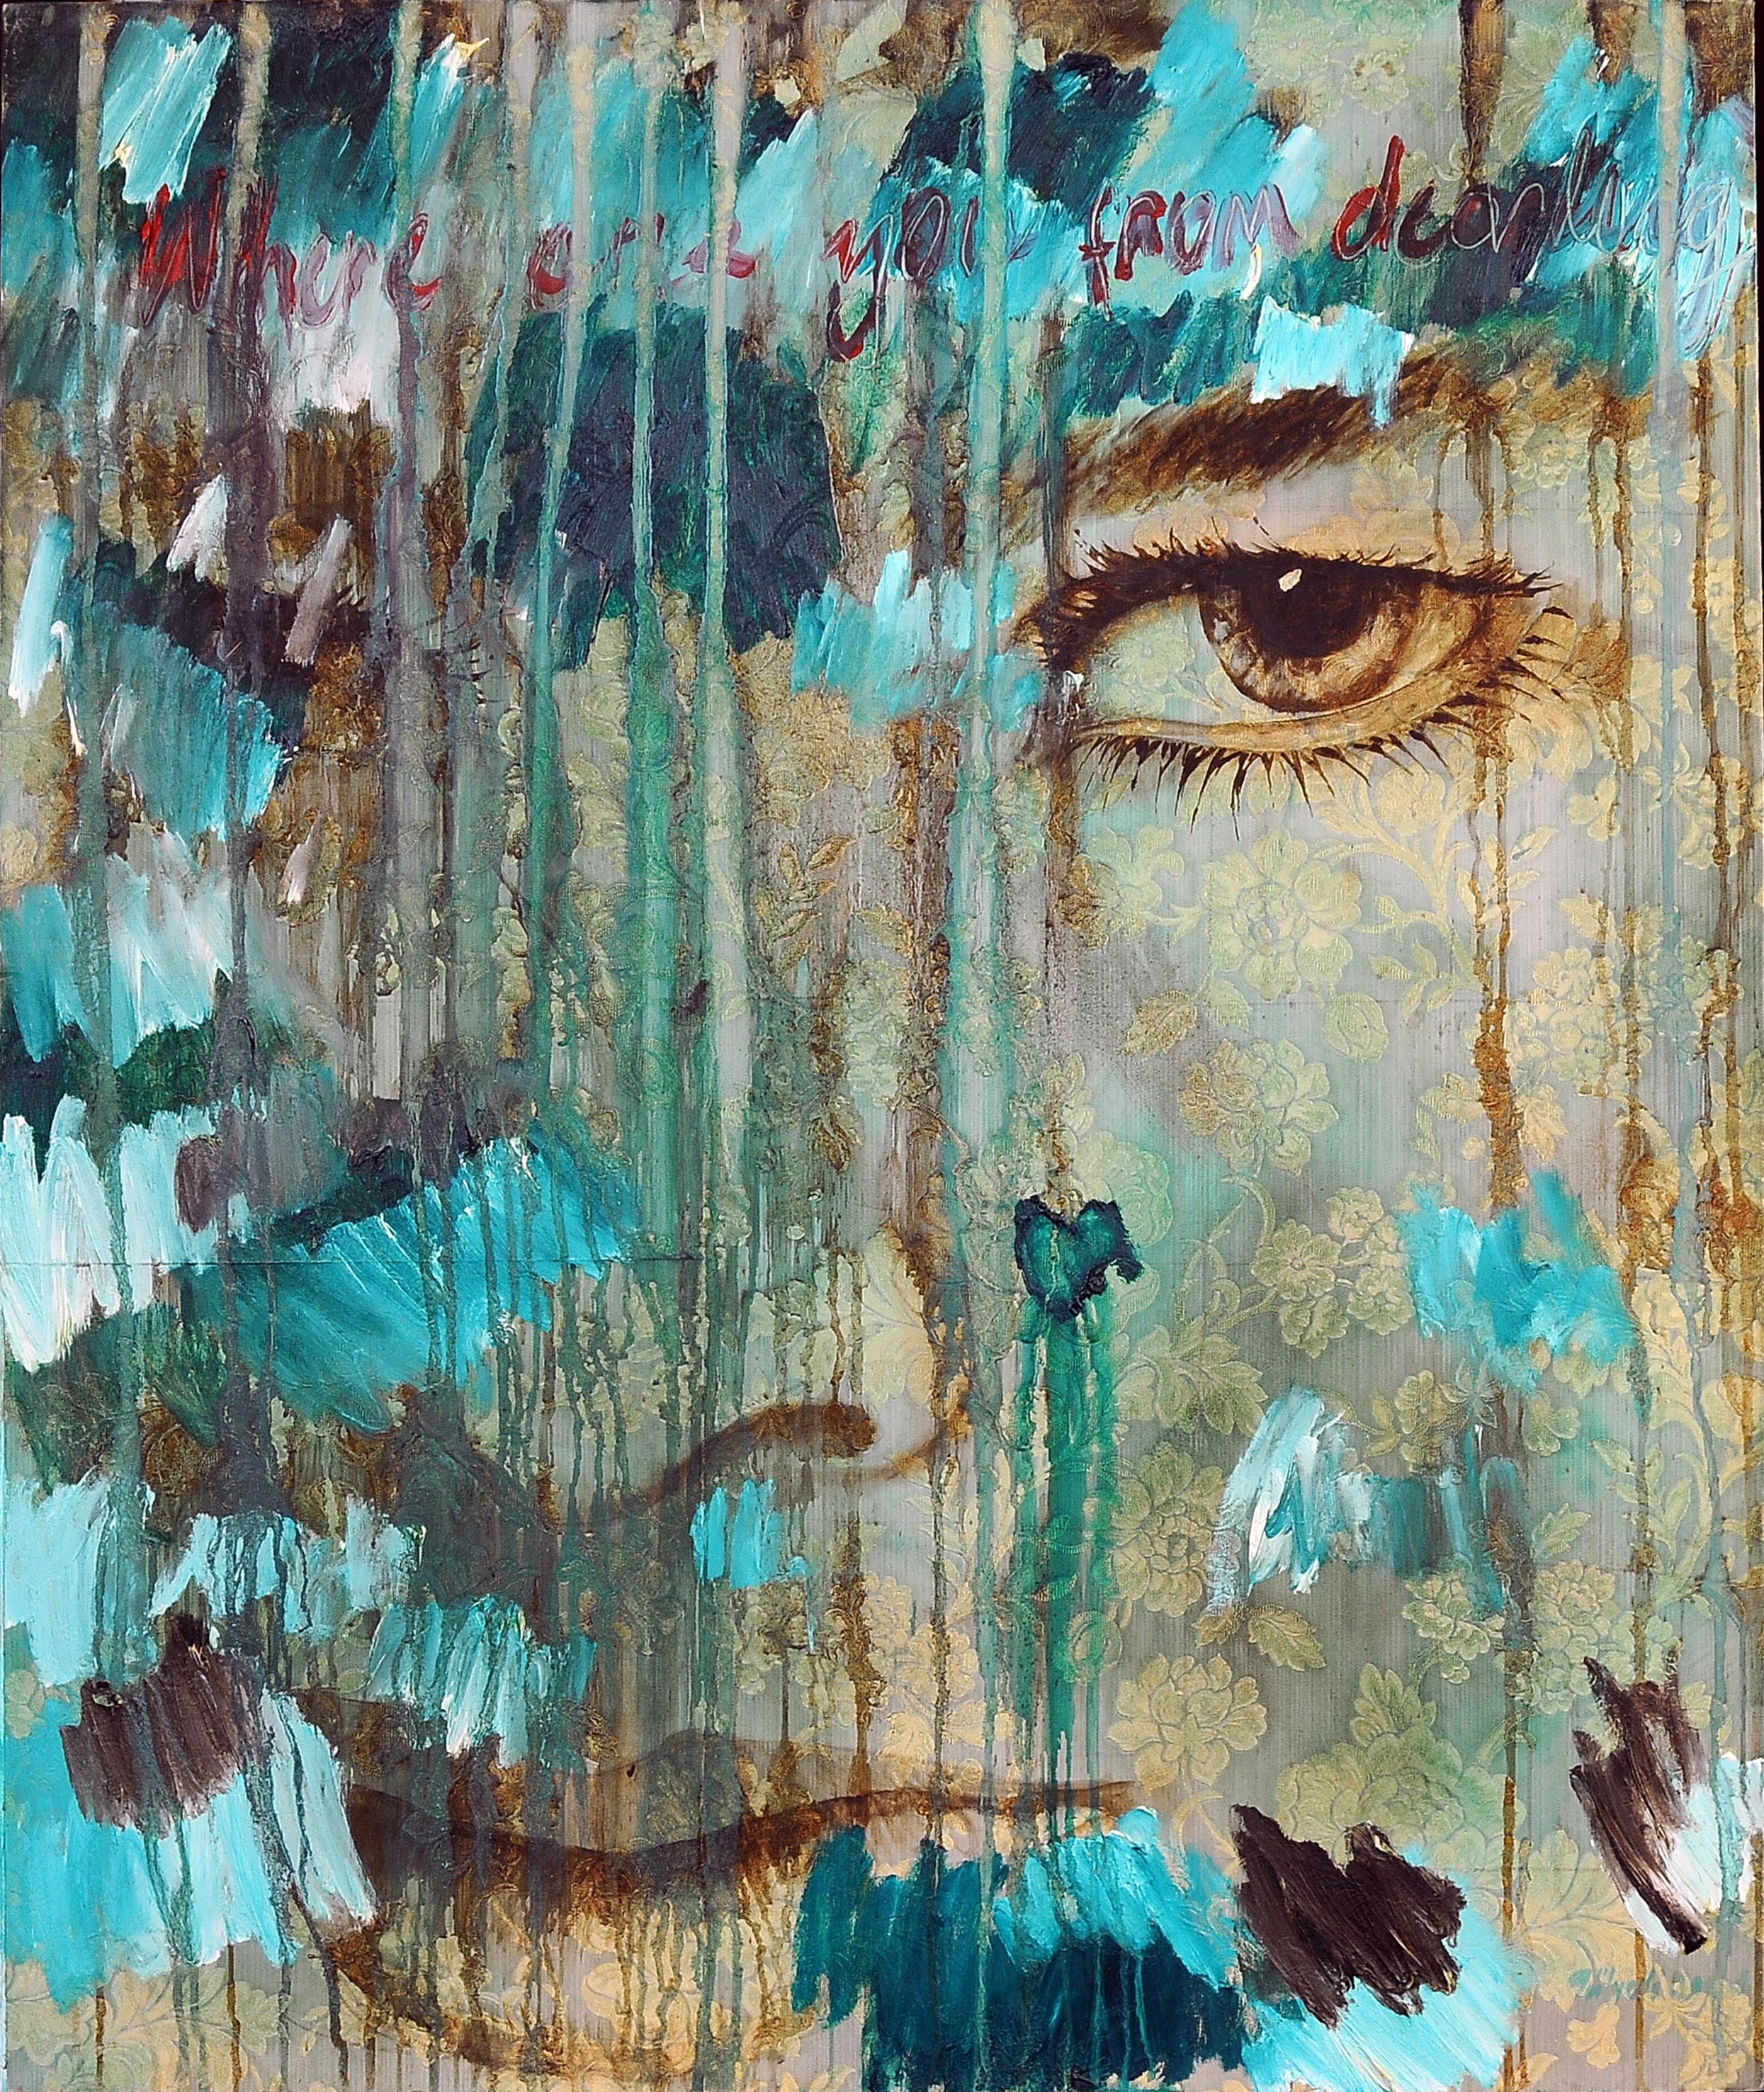 İsimsiz- Untitled, 2004, Tuval üzerine karışık teknik- Mixed media on canvas, 110x90 cm